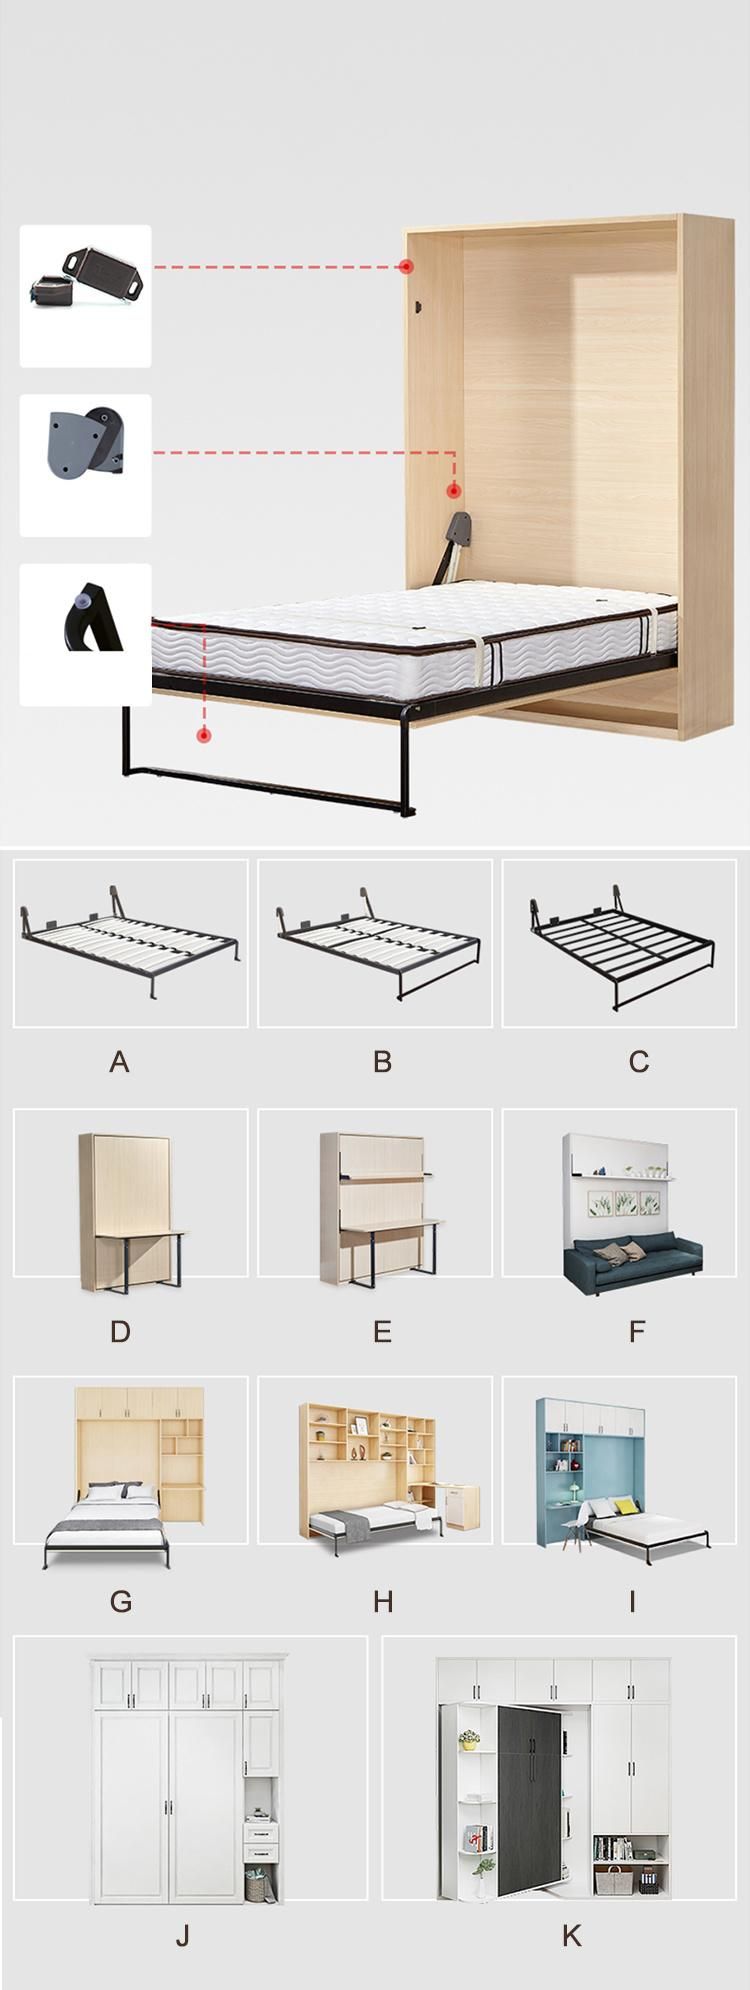 Home Set Space Saving Bedroom Furniture Hidden Wall Murphy Bed Steel Mechanism with Hardware Kit